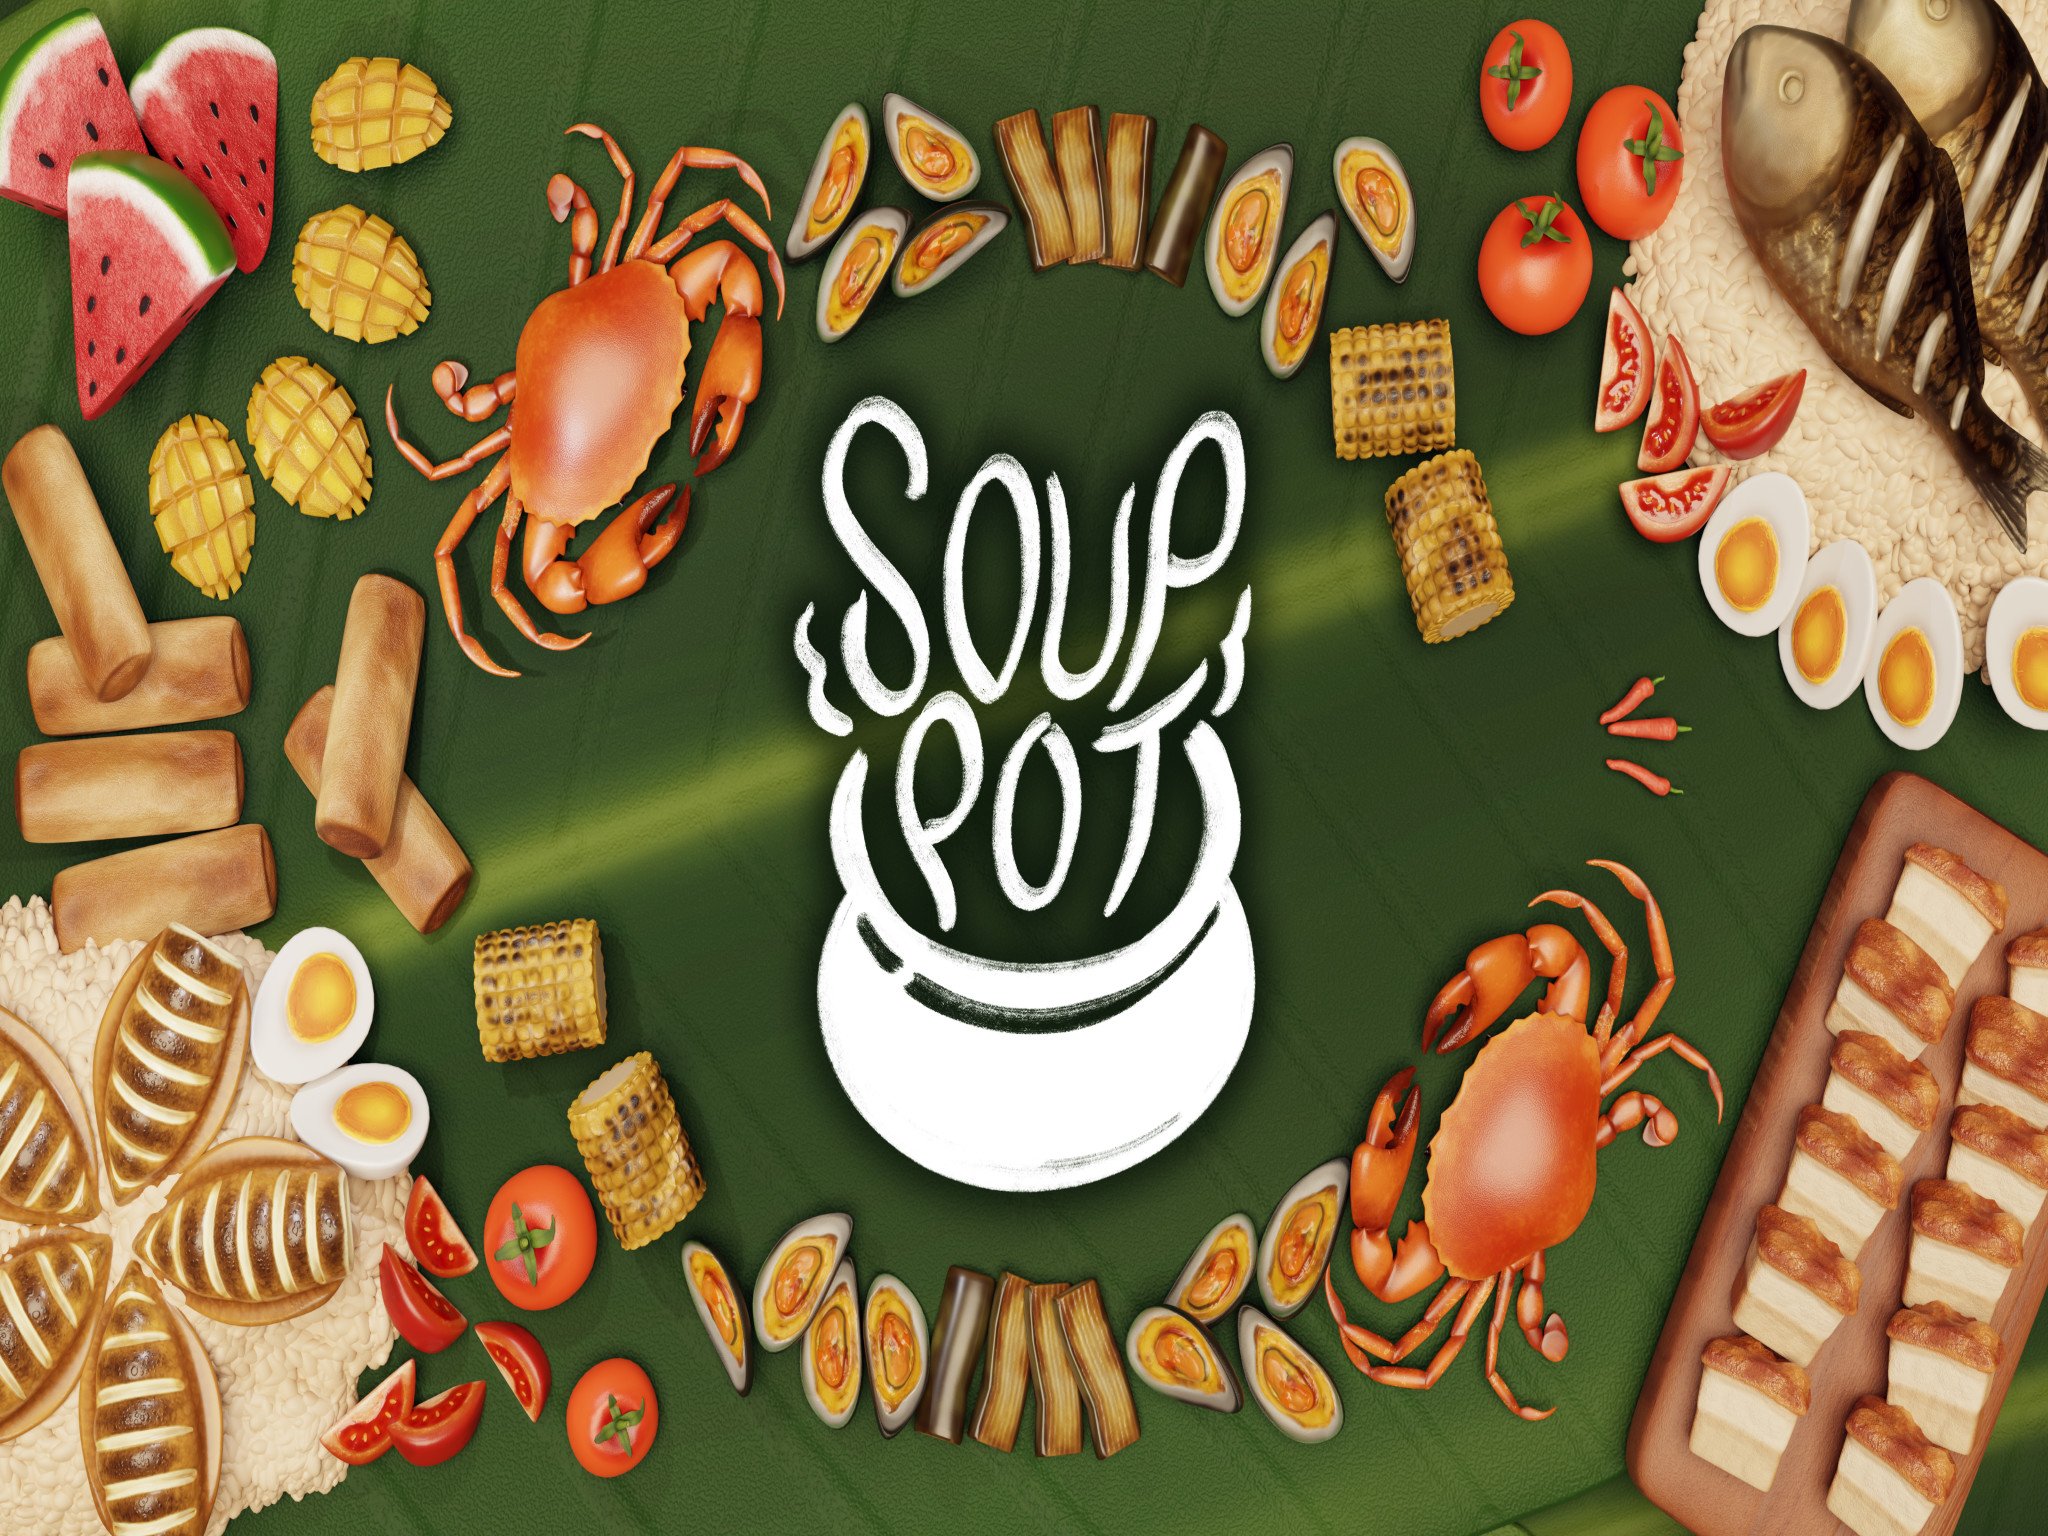 soup-pot-key-art-02.jpg